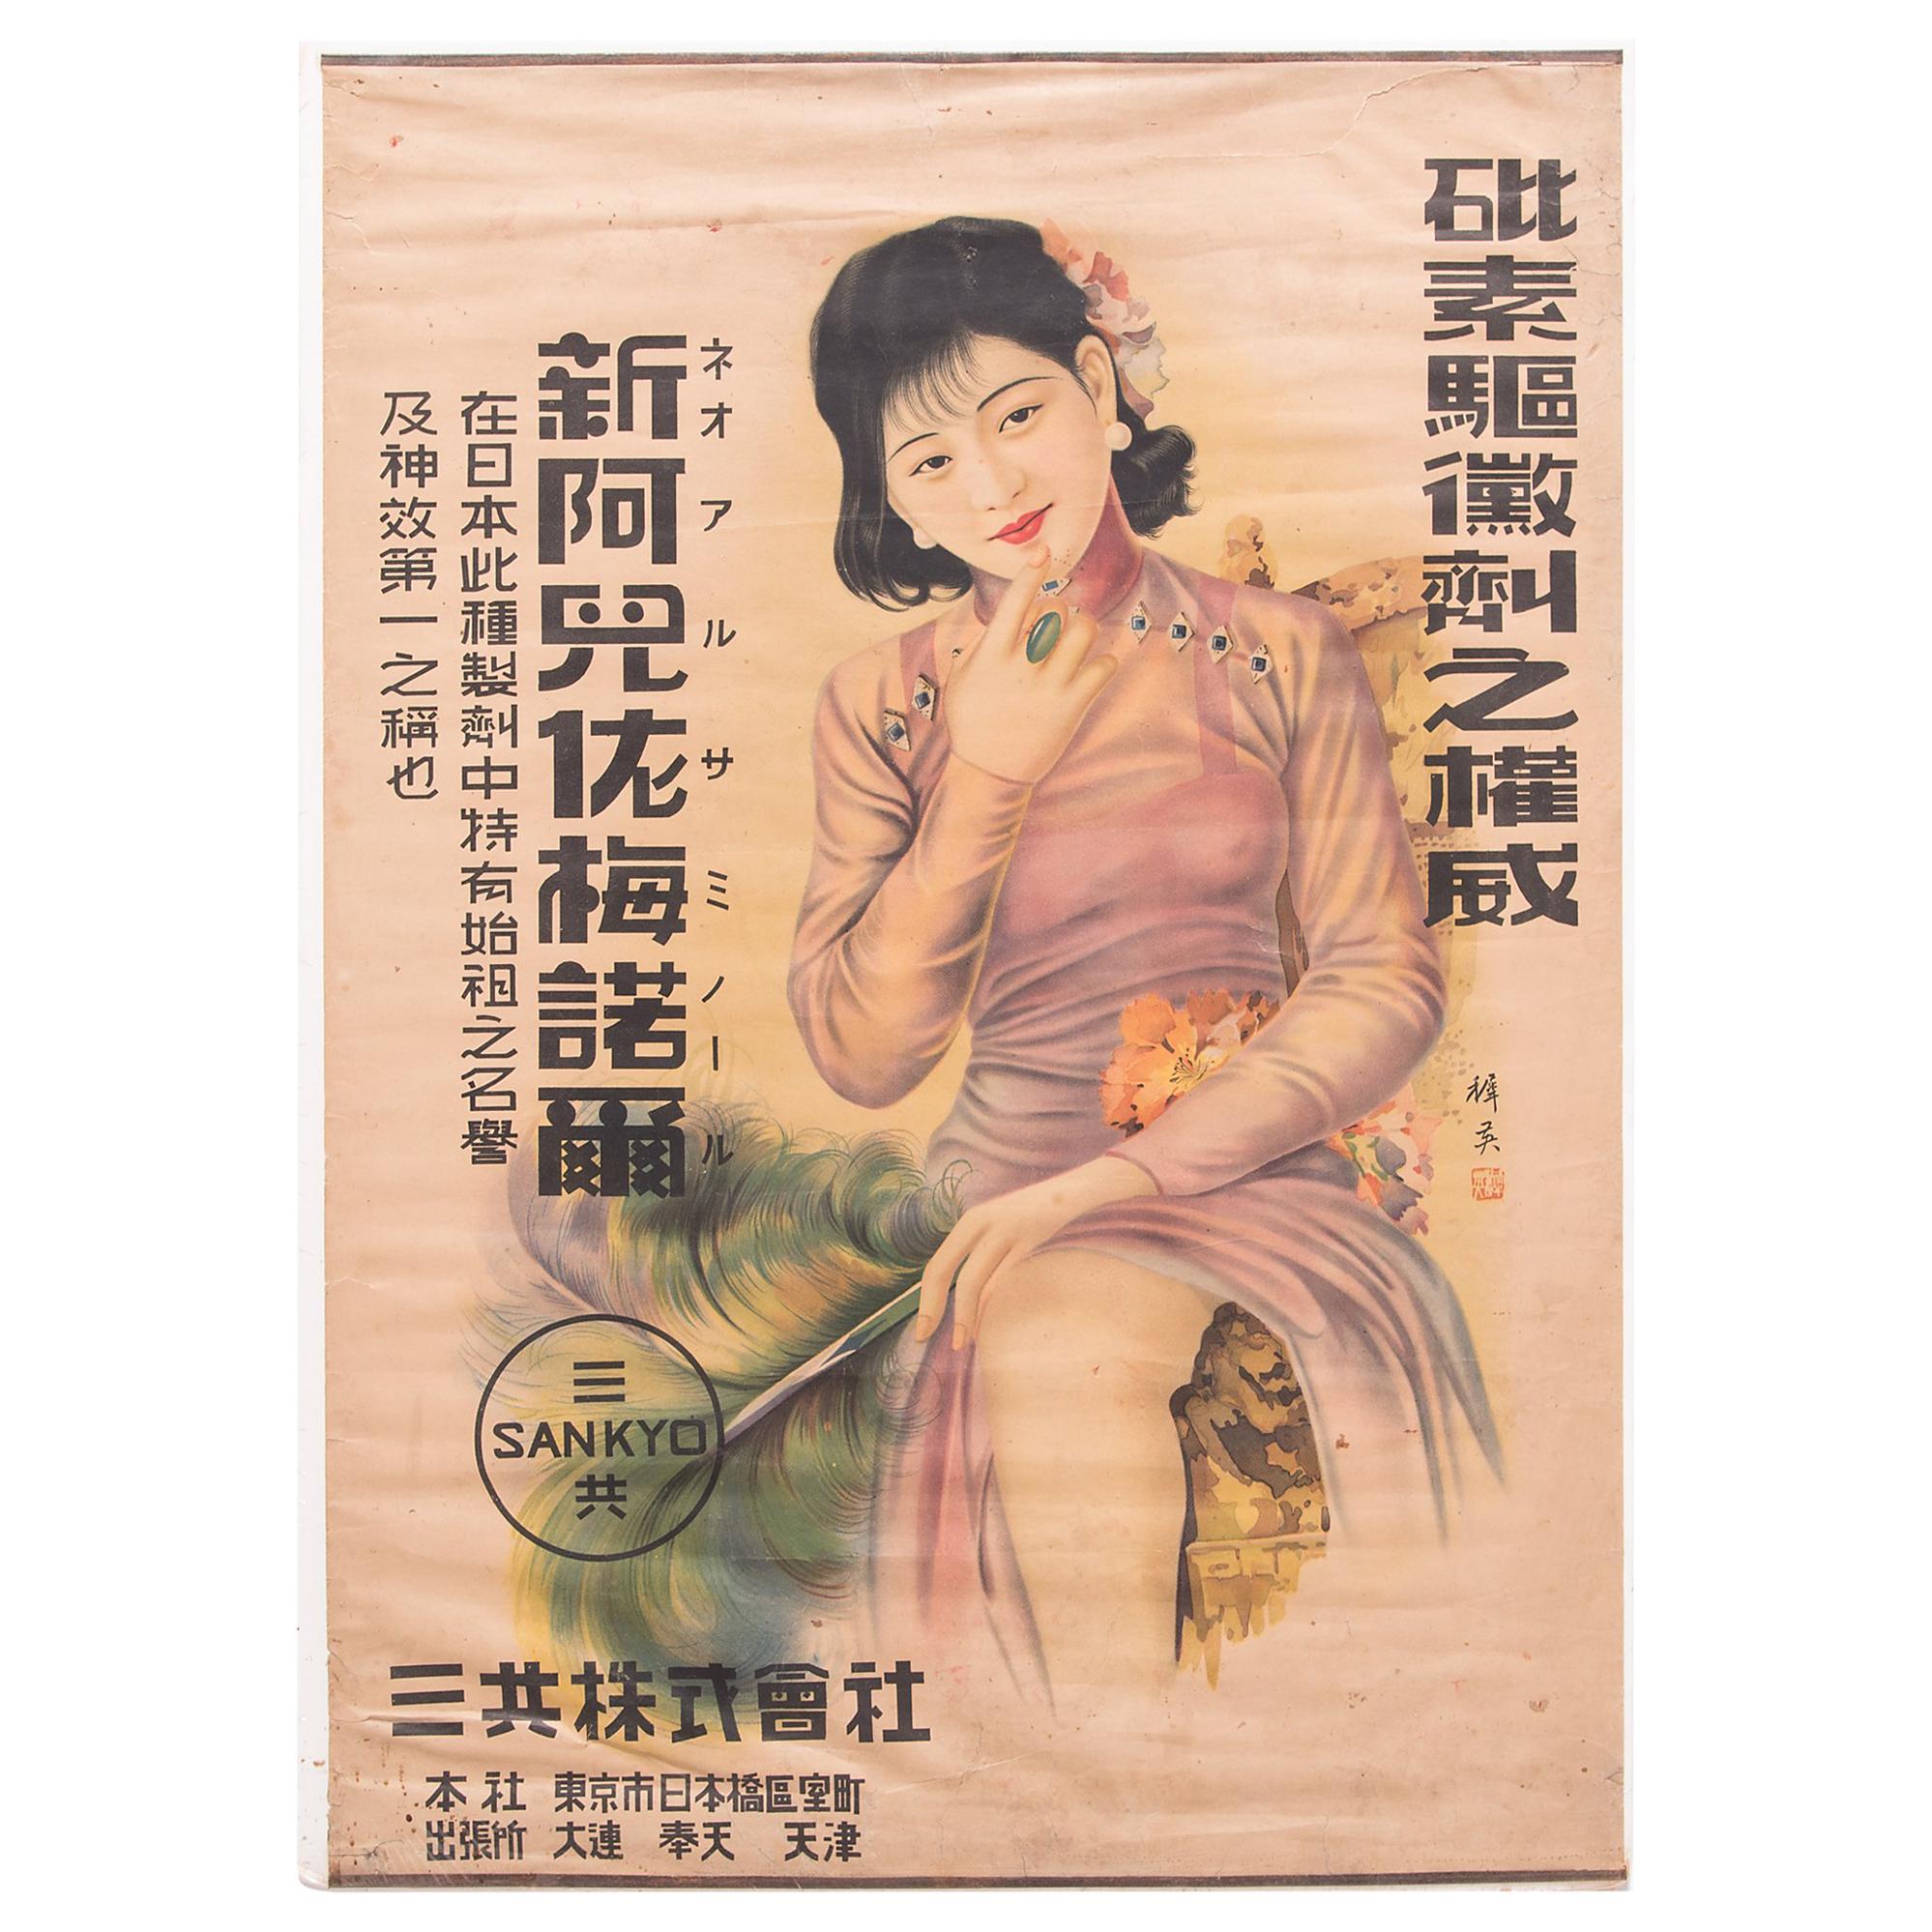 Vintage Sankyo Deco Advertisement Poster